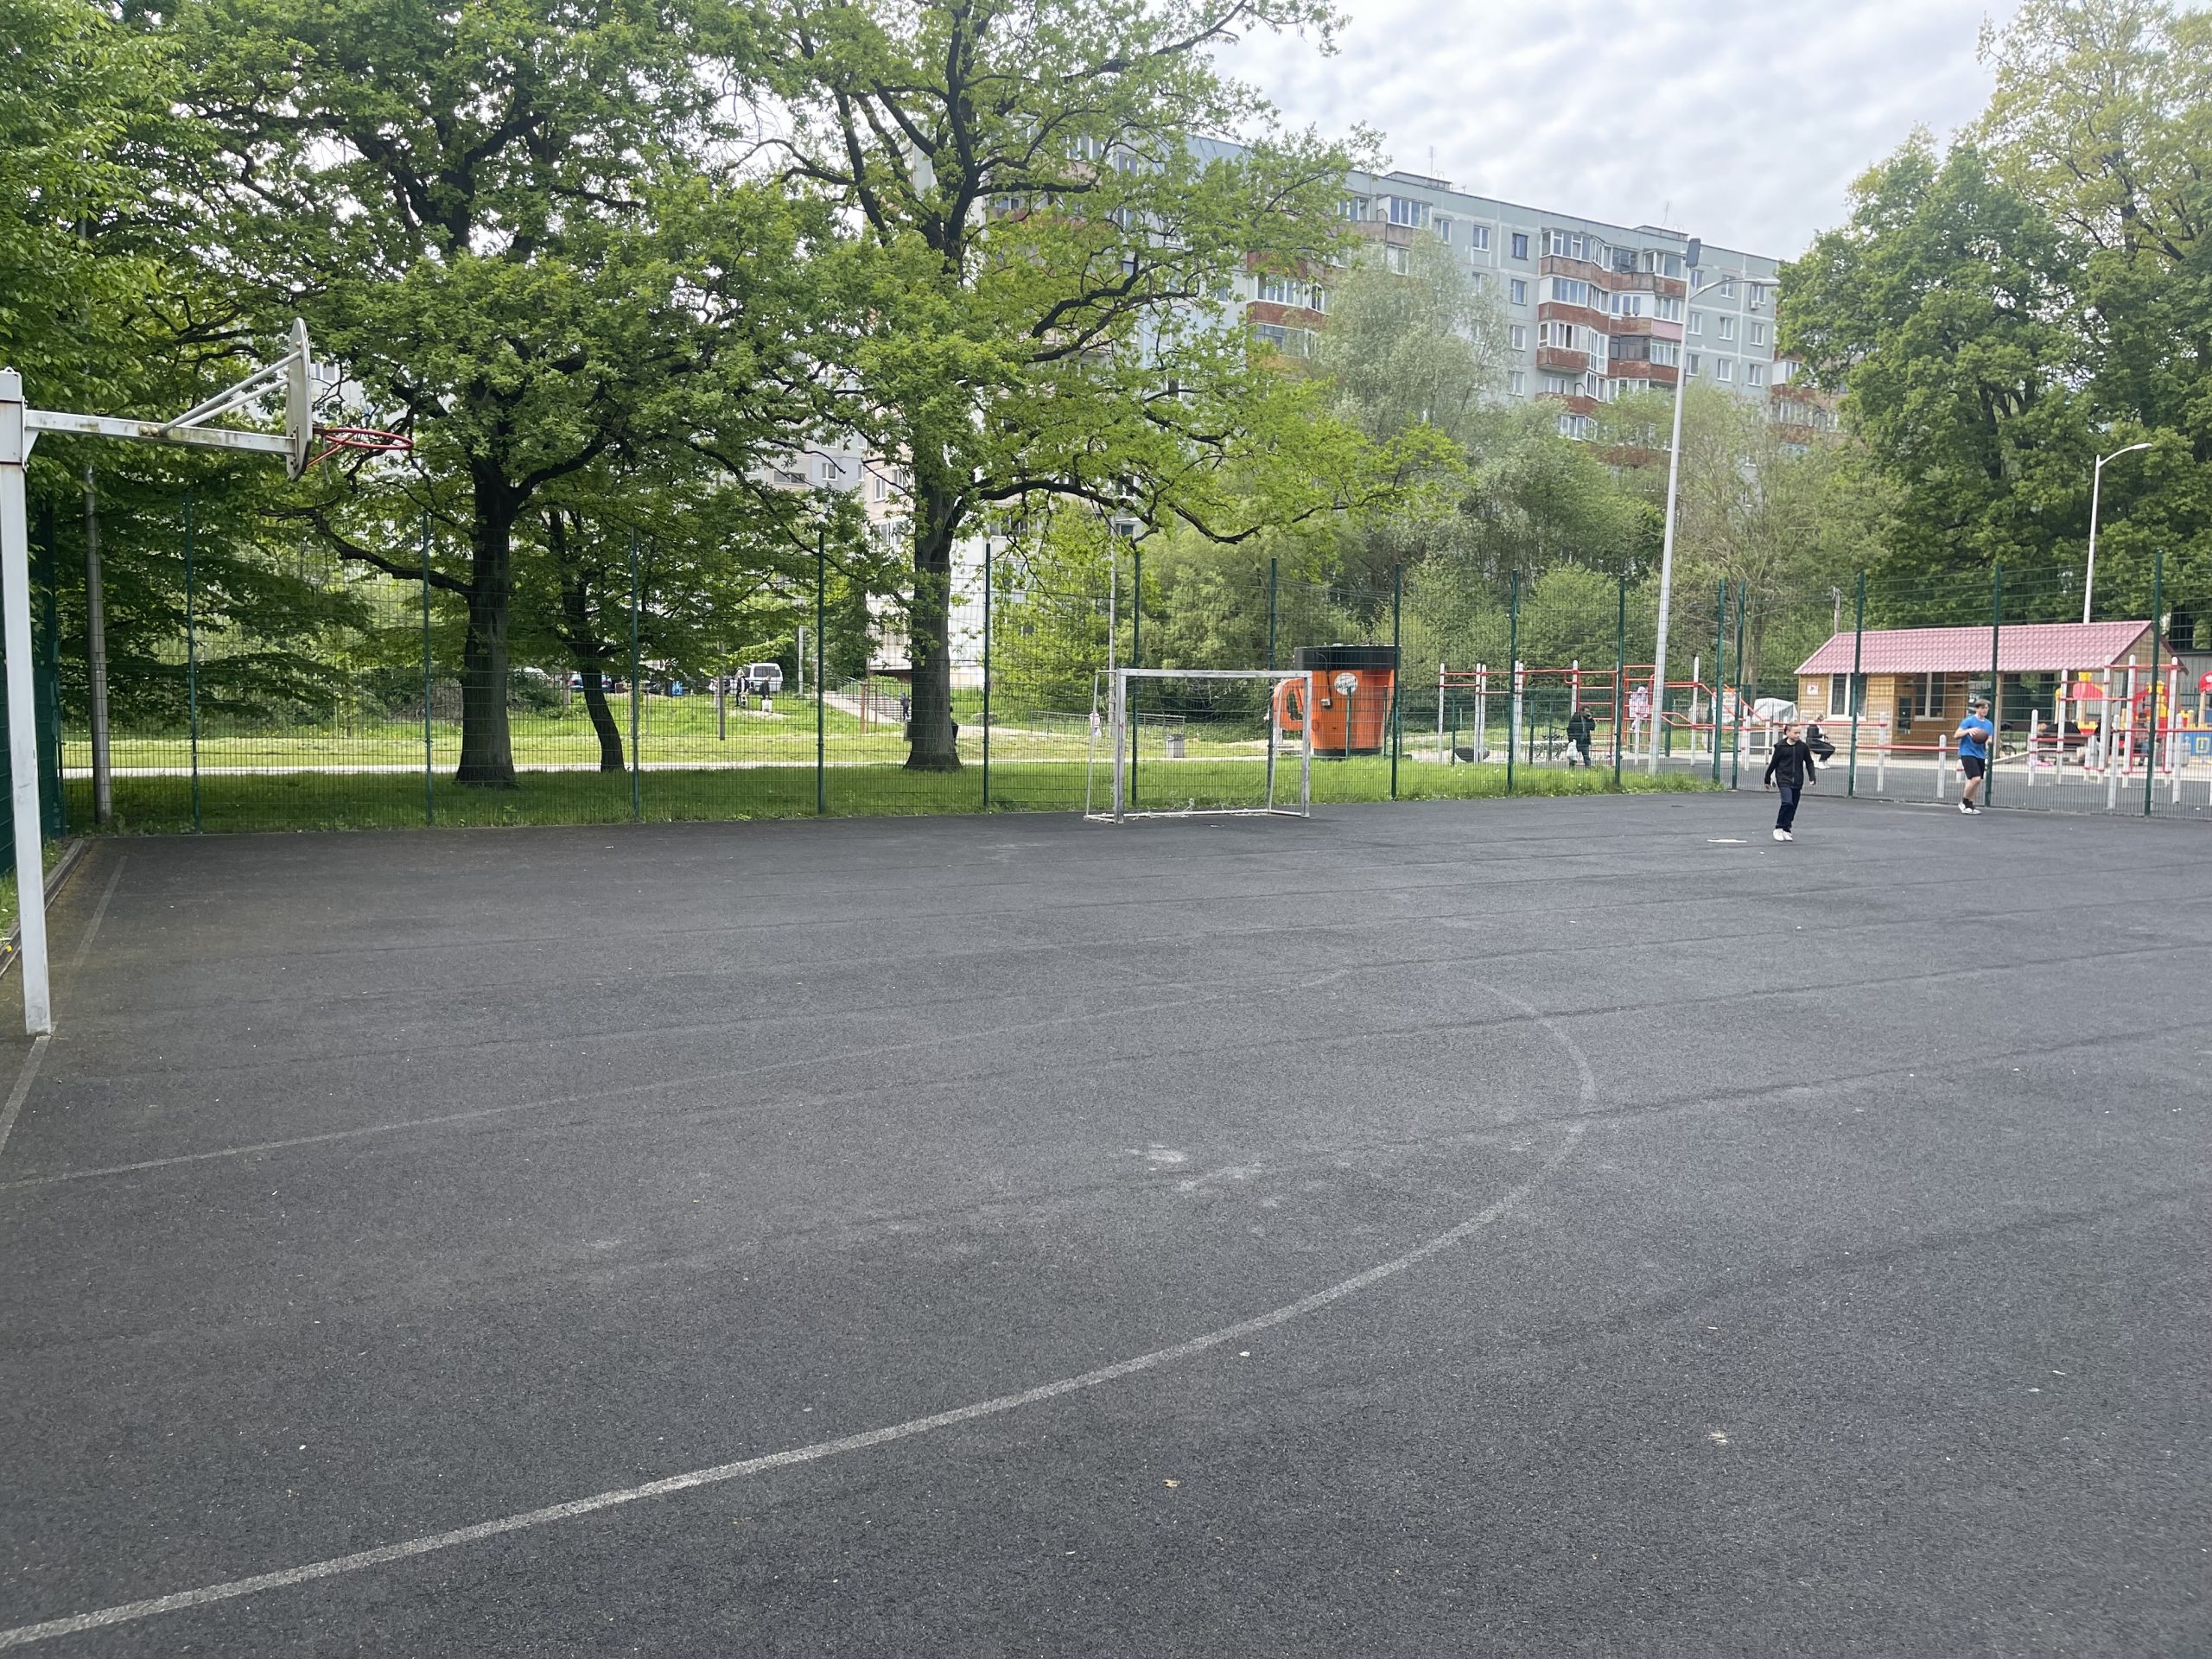 Спортивная площадка в парке Макса Ашманна